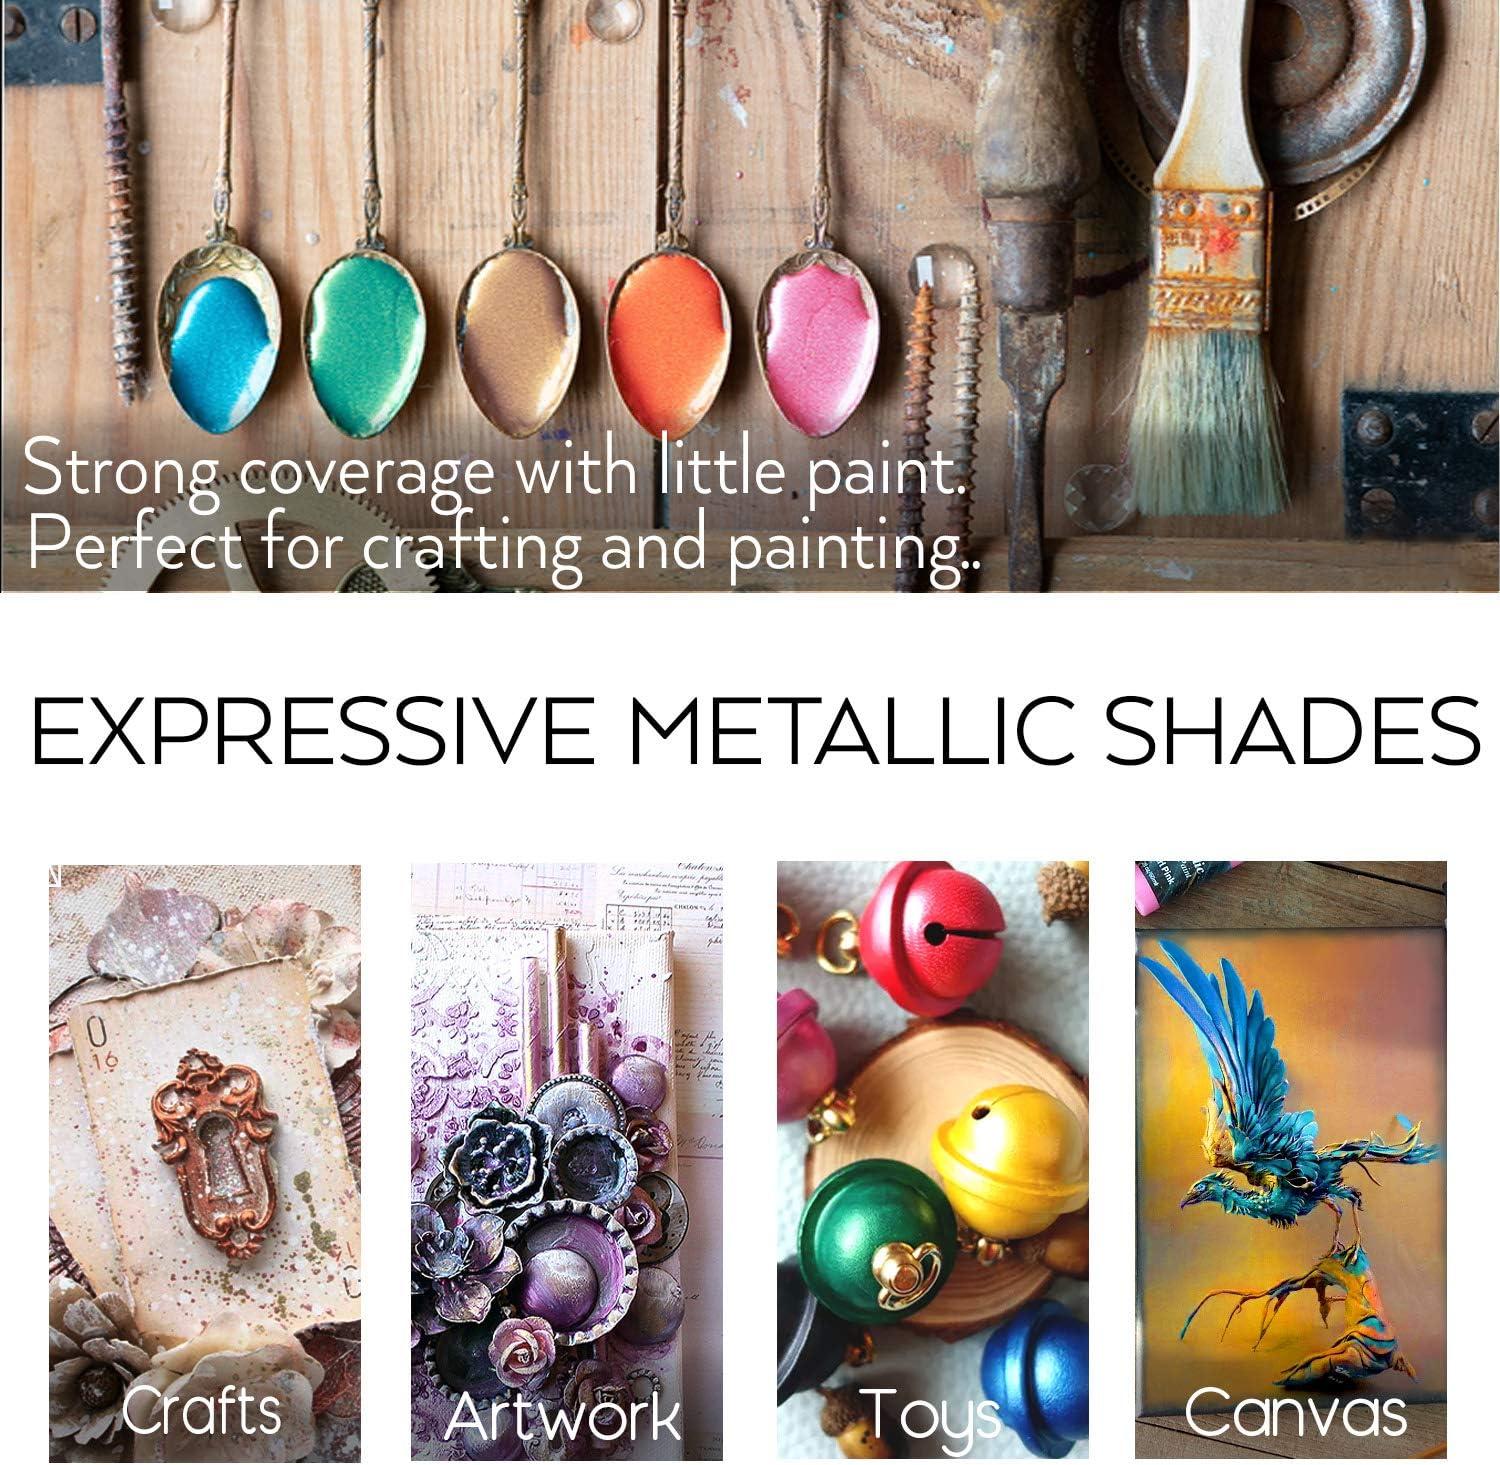 Metallic Paint Sets - DecoArt Acrylic Paint and Art Supplies